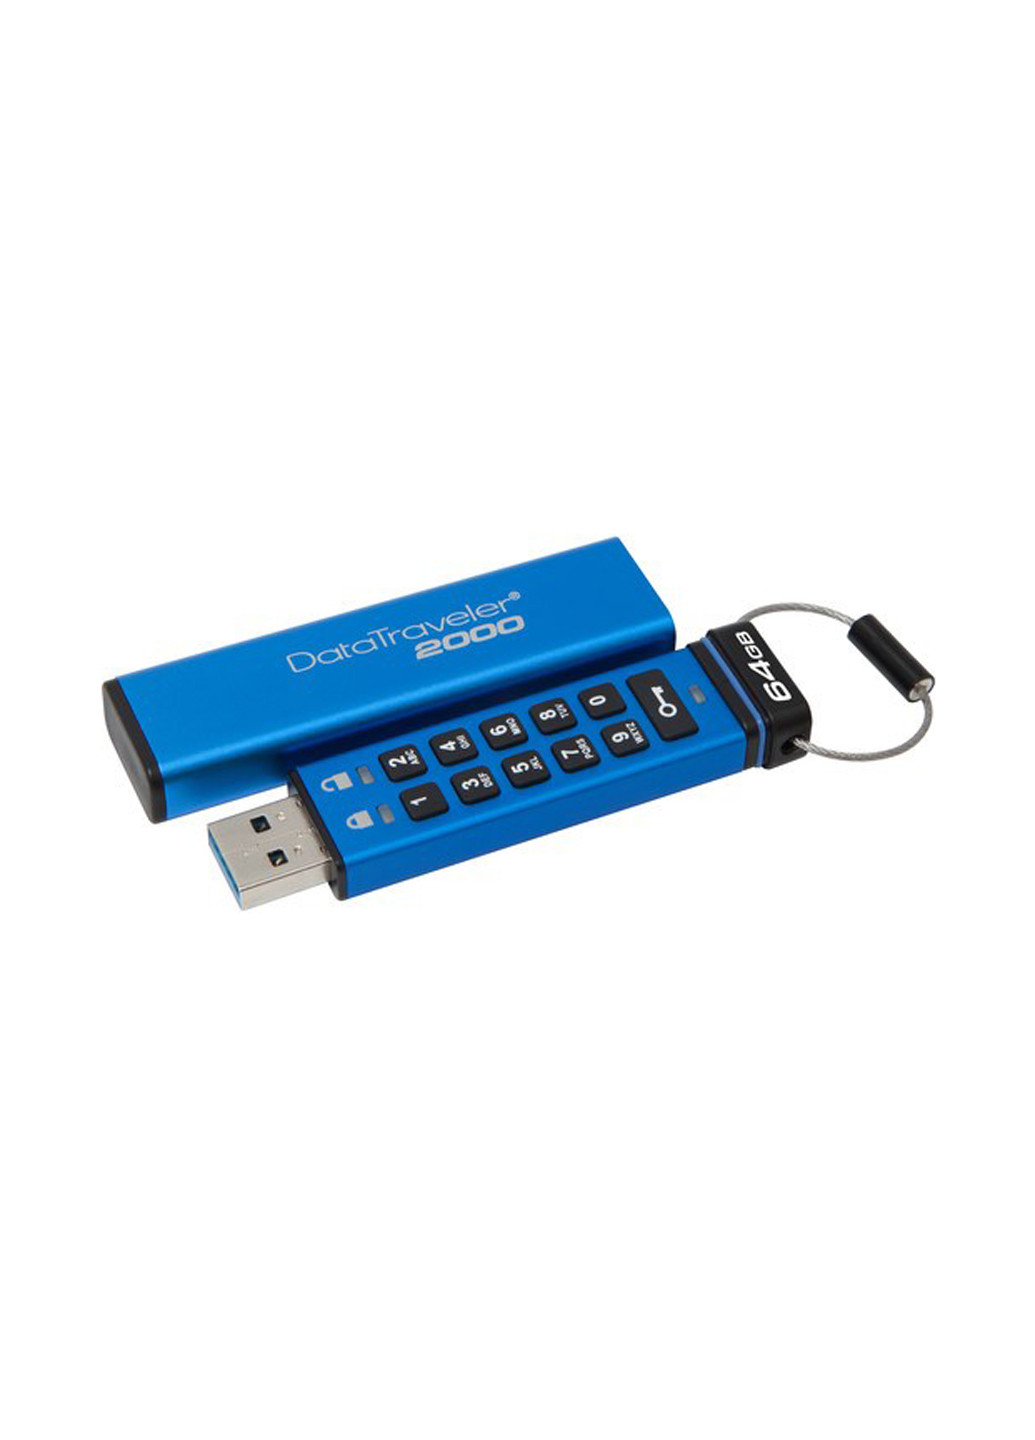 Флеш память USB DataTraveler 2000 64GB USB 3.1 (DT2000/64GB) Kingston флеш память usb kingston datatraveler 2000 64gb usb 3.1 (dt2000/64gb) (135165495)